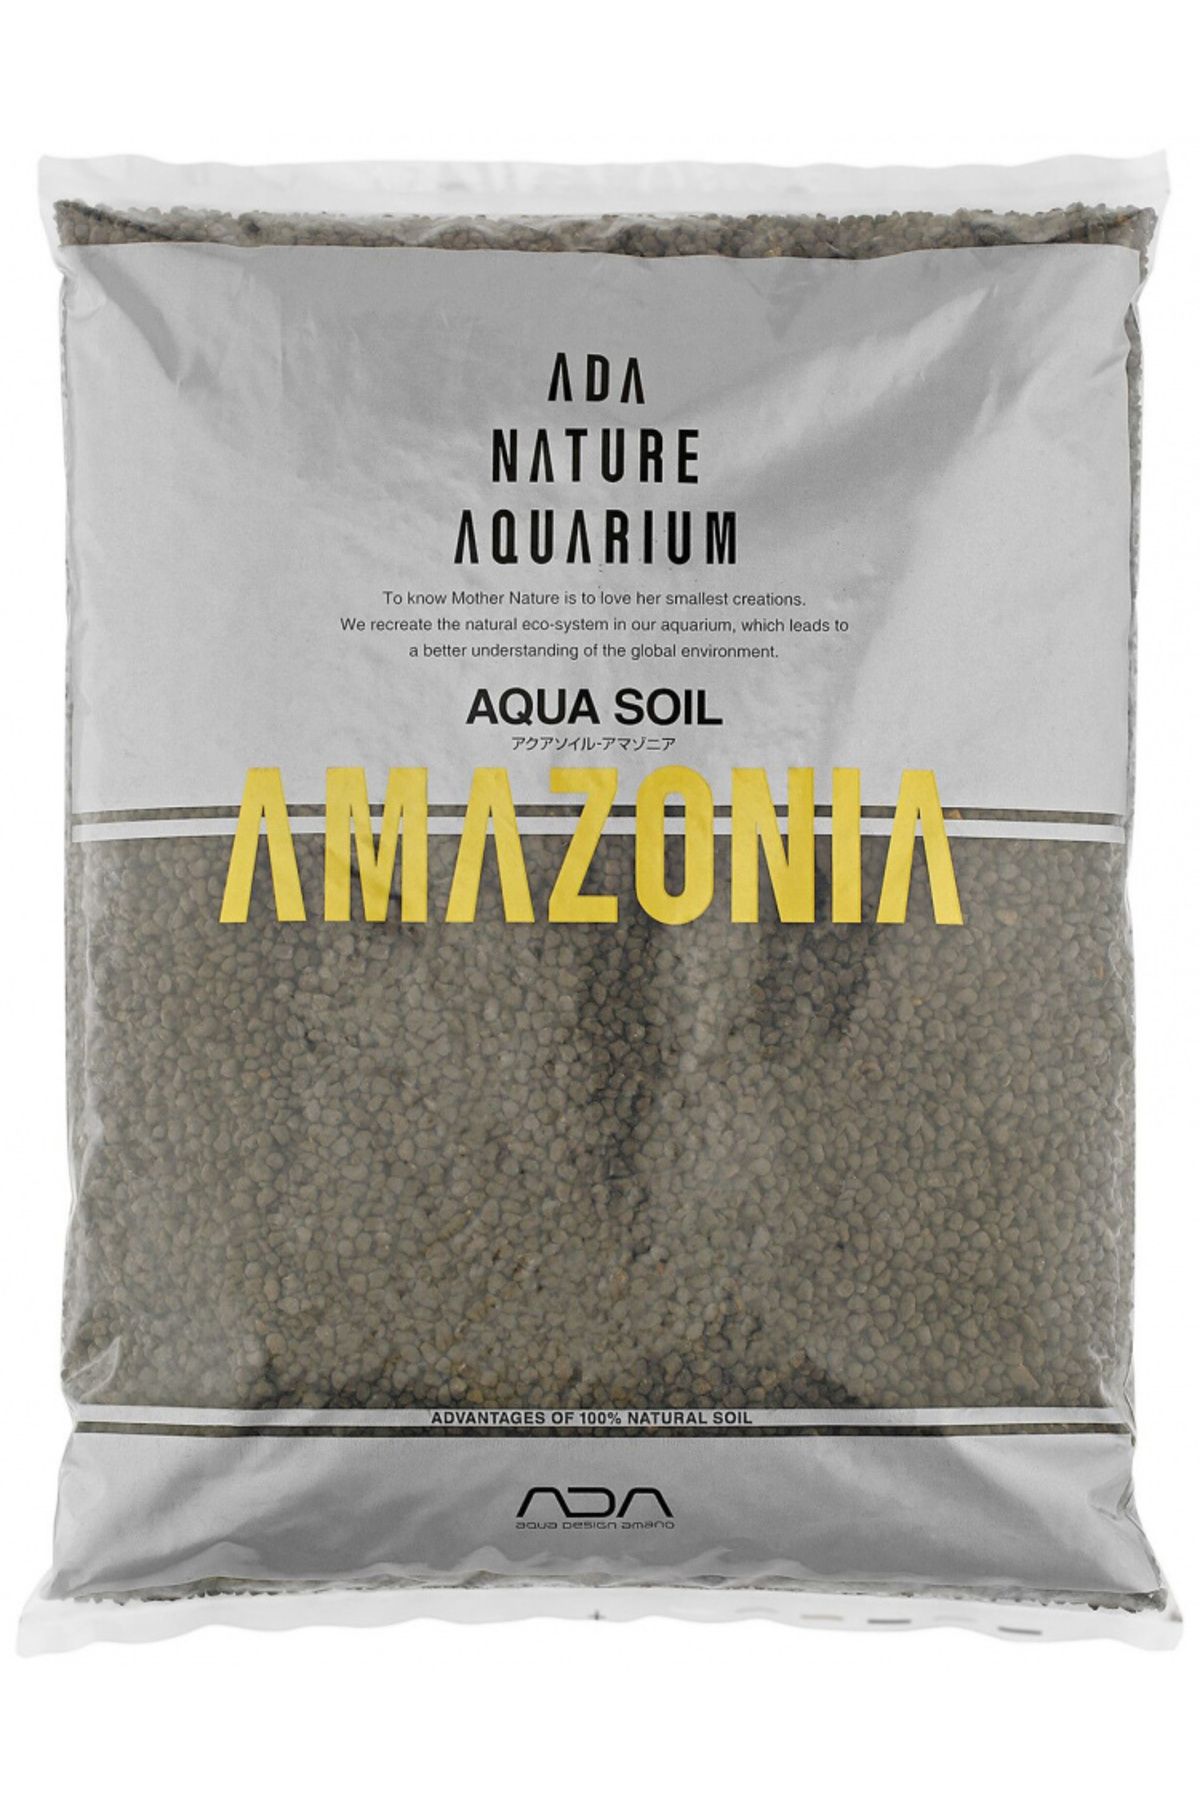 Ada Nature Aquarium Ada Amazonia Aqua Soil Normal Type 9 Litre Gri Paket Sarı Yazı Aktif Soil Karides Bitki Toprağı